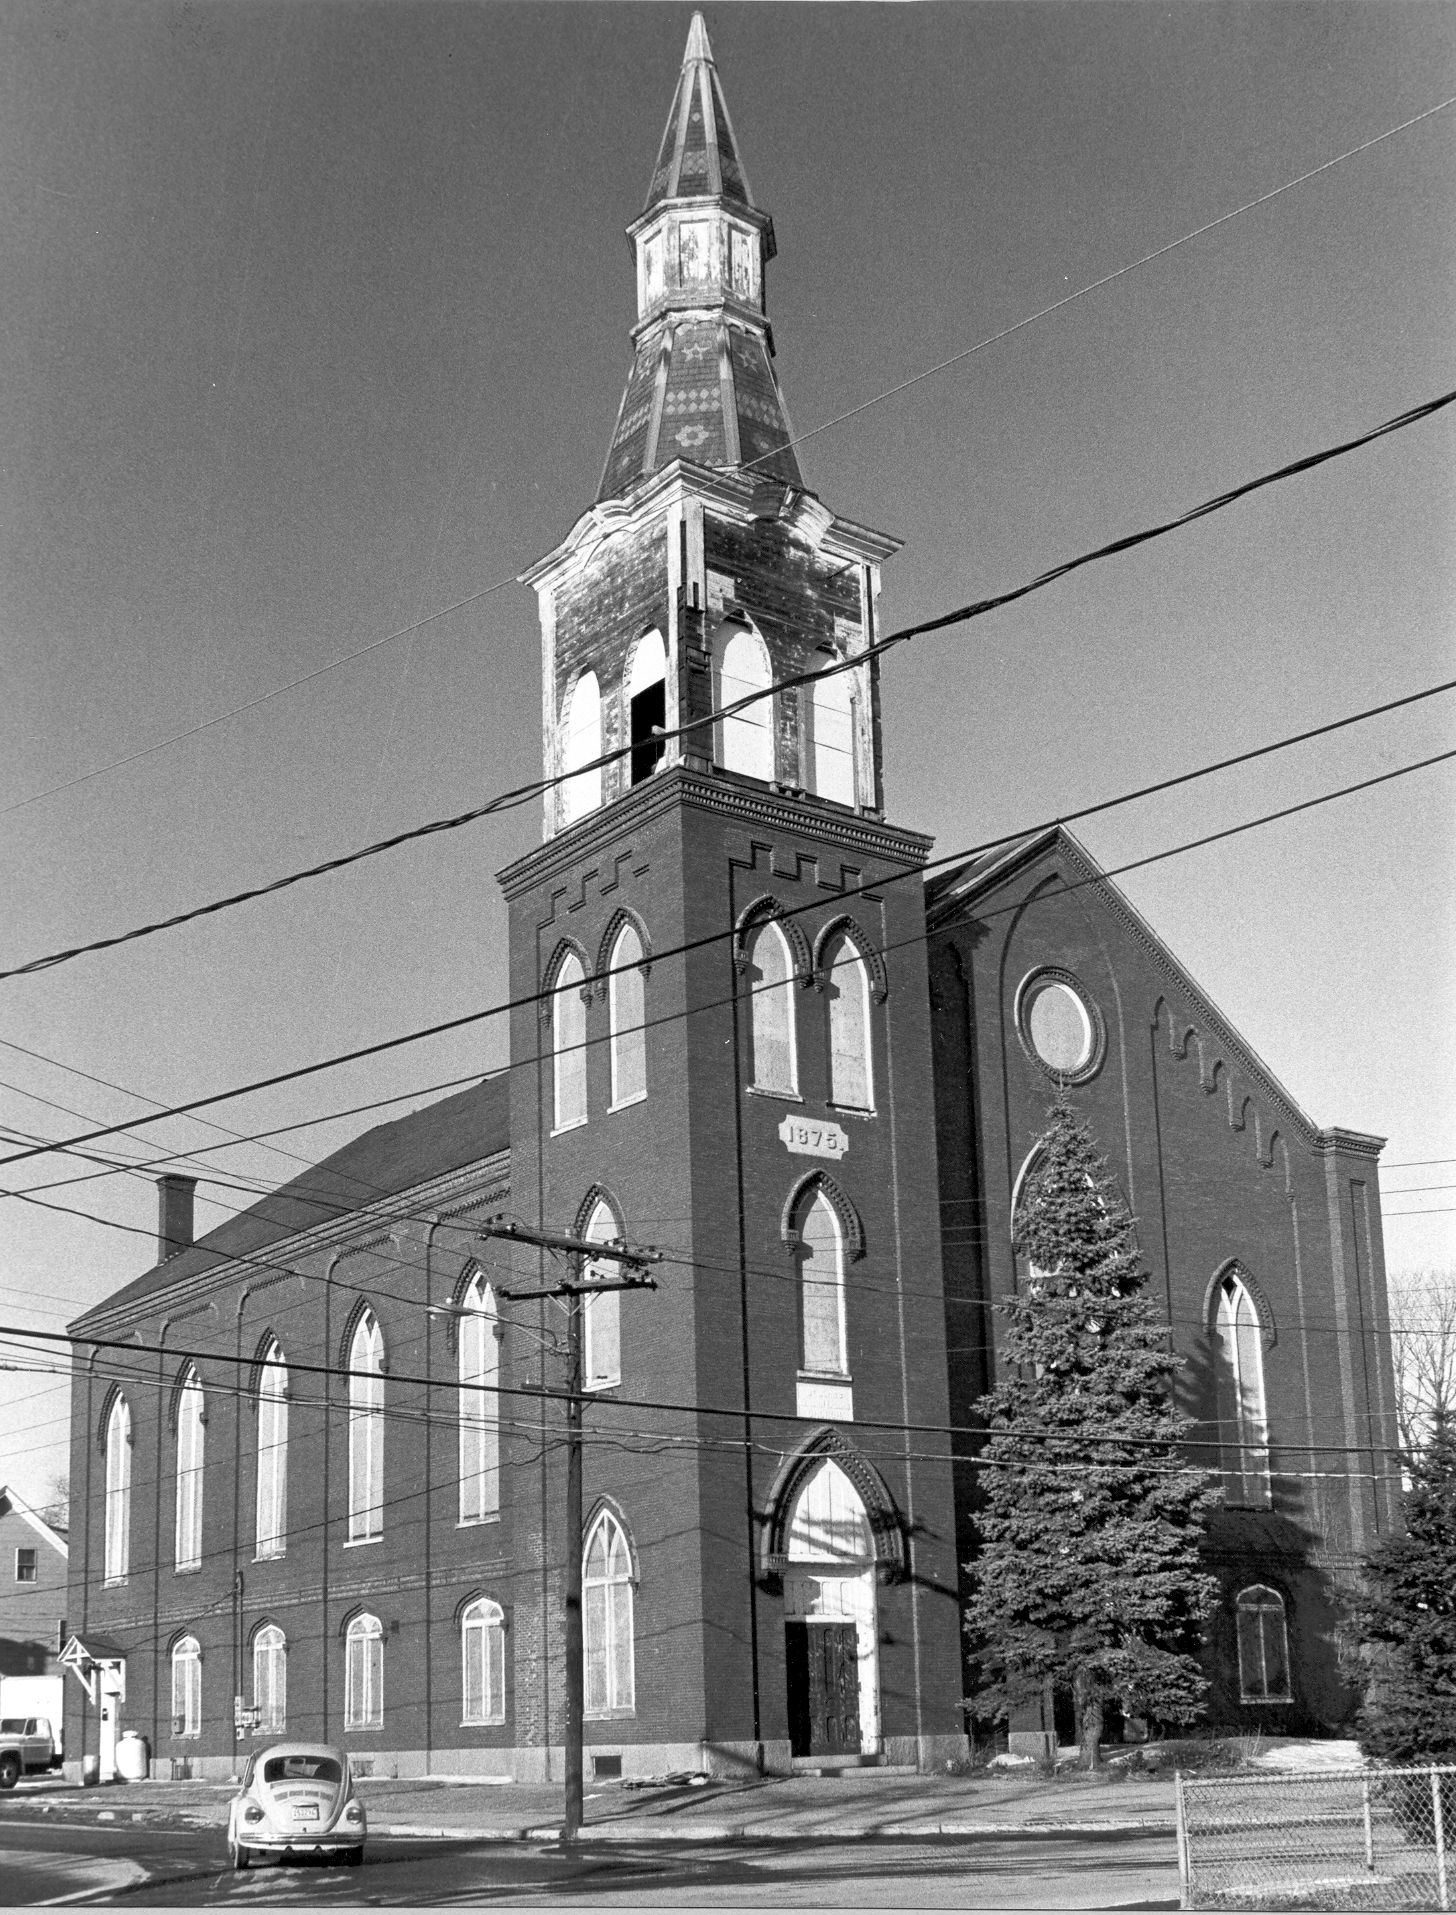 St. Johns Methodist Church